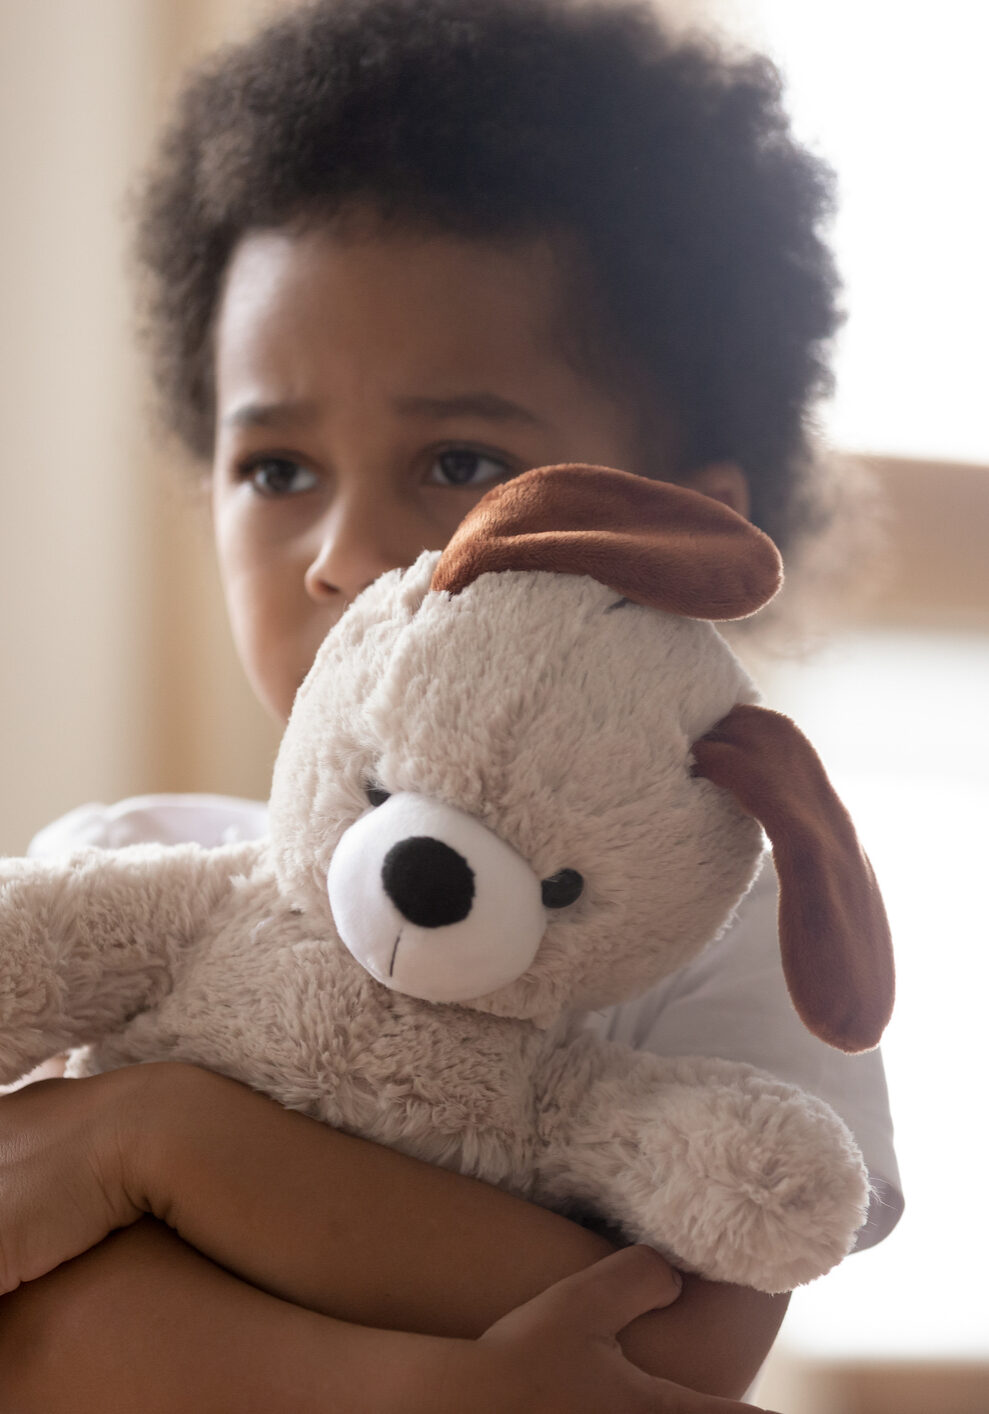 Child Psychologist Trauma Therapy for Kids